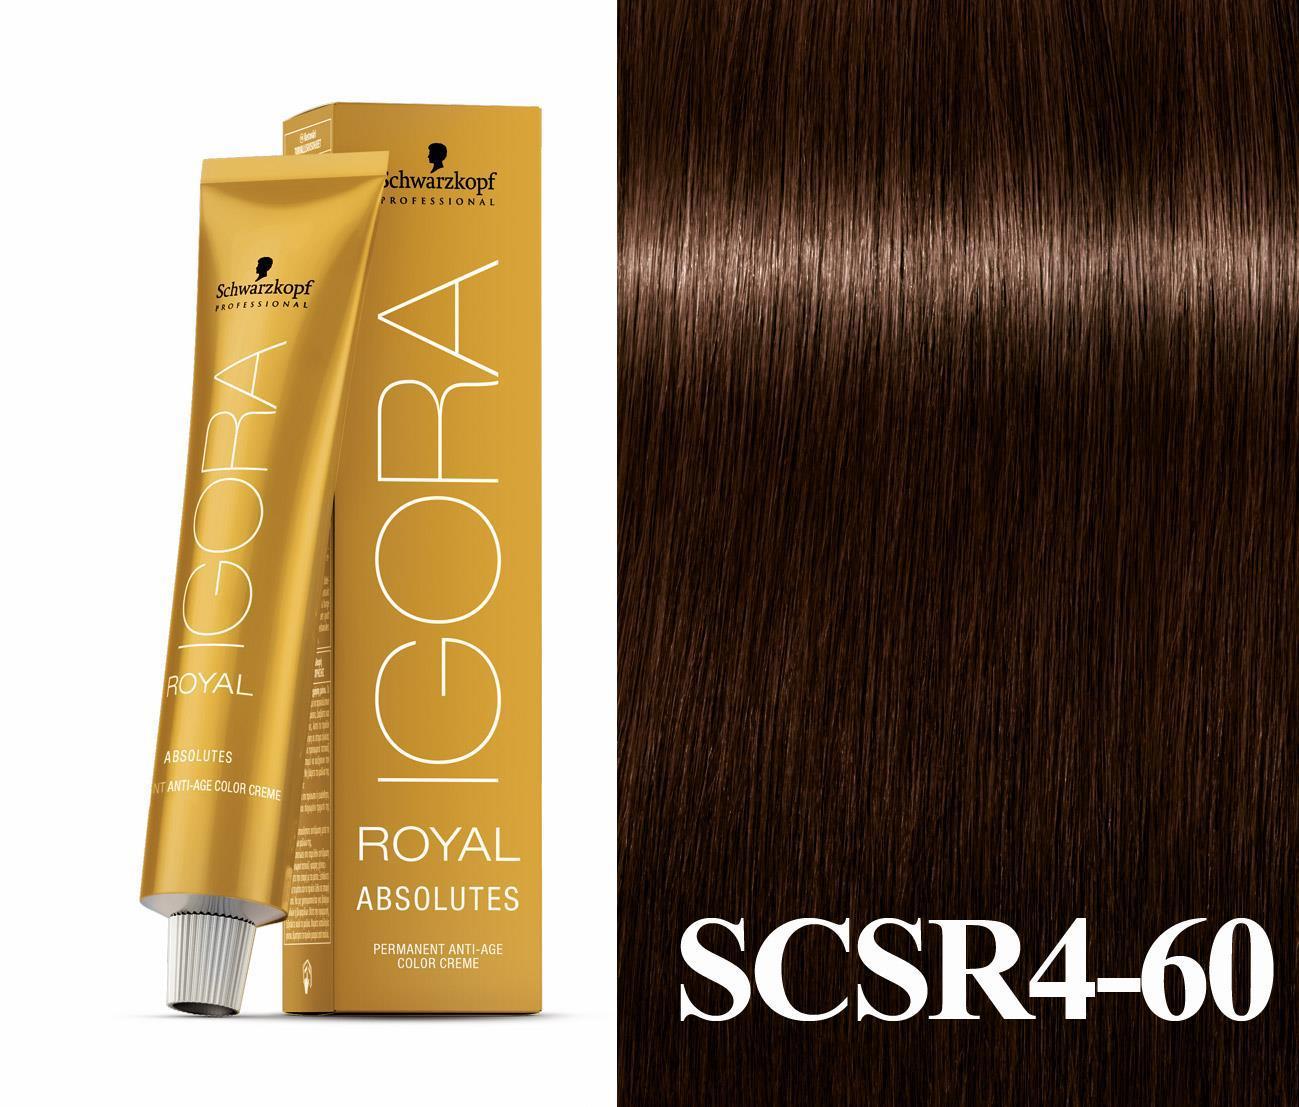 Schwarzkopf Absolute Igora Royal Dark Blonde Age Blend 7-450 – Salon Beauty  Brands